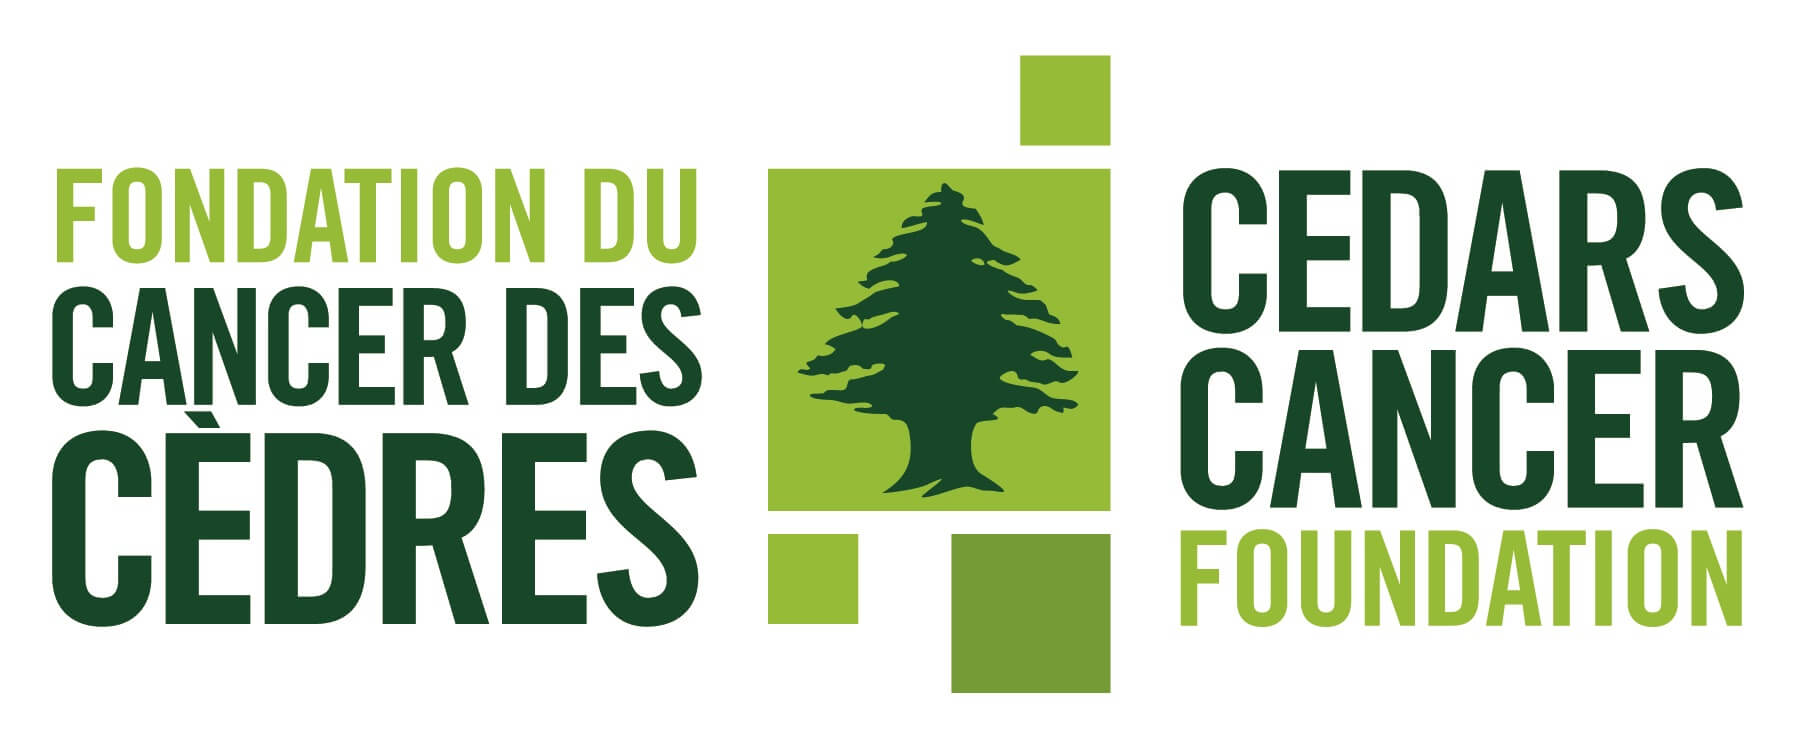 Cedars cancer foundation